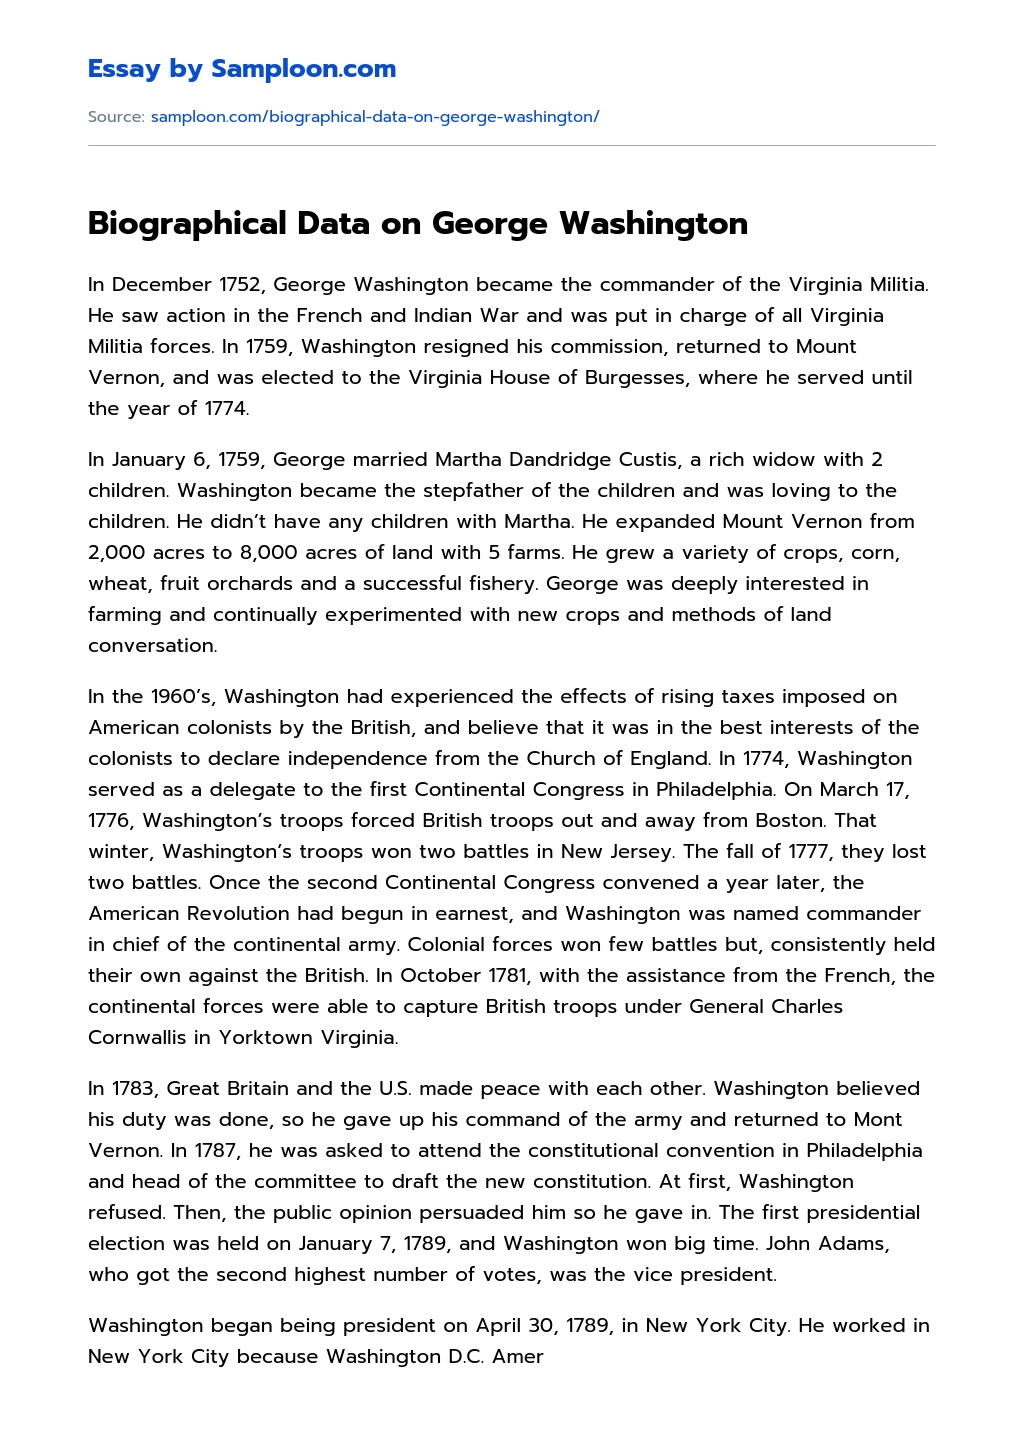 Biographical Data on George Washington essay